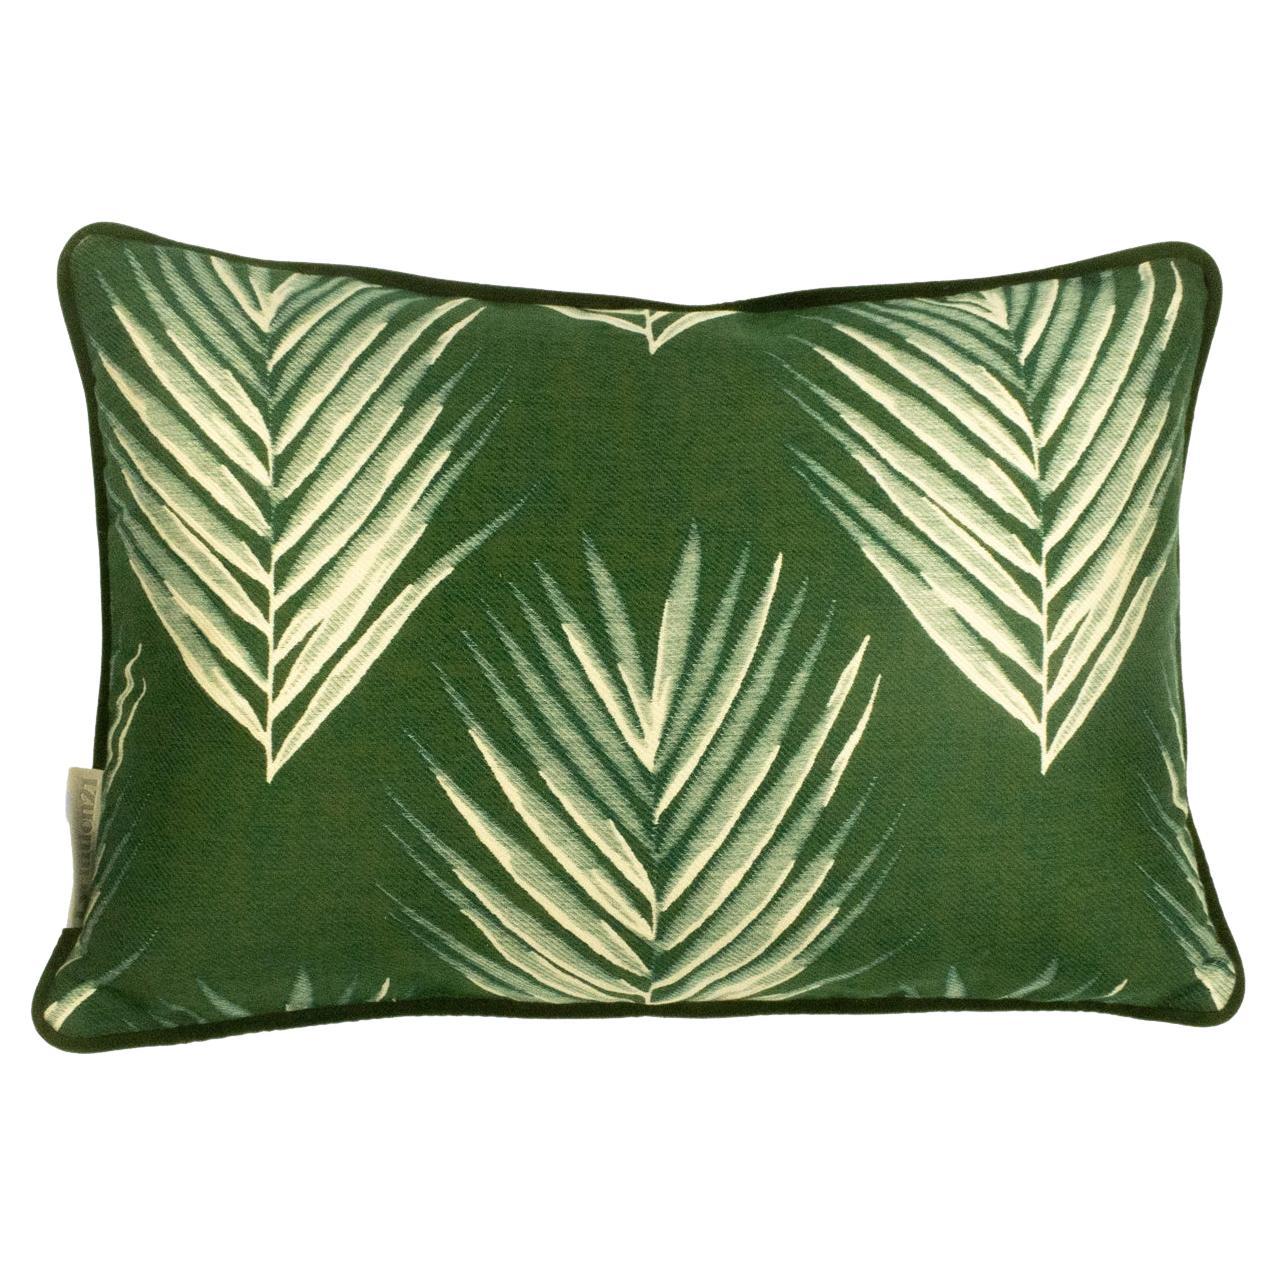 Coussin / oreiller à motif de bambou vert feuille inversée par Evolution21